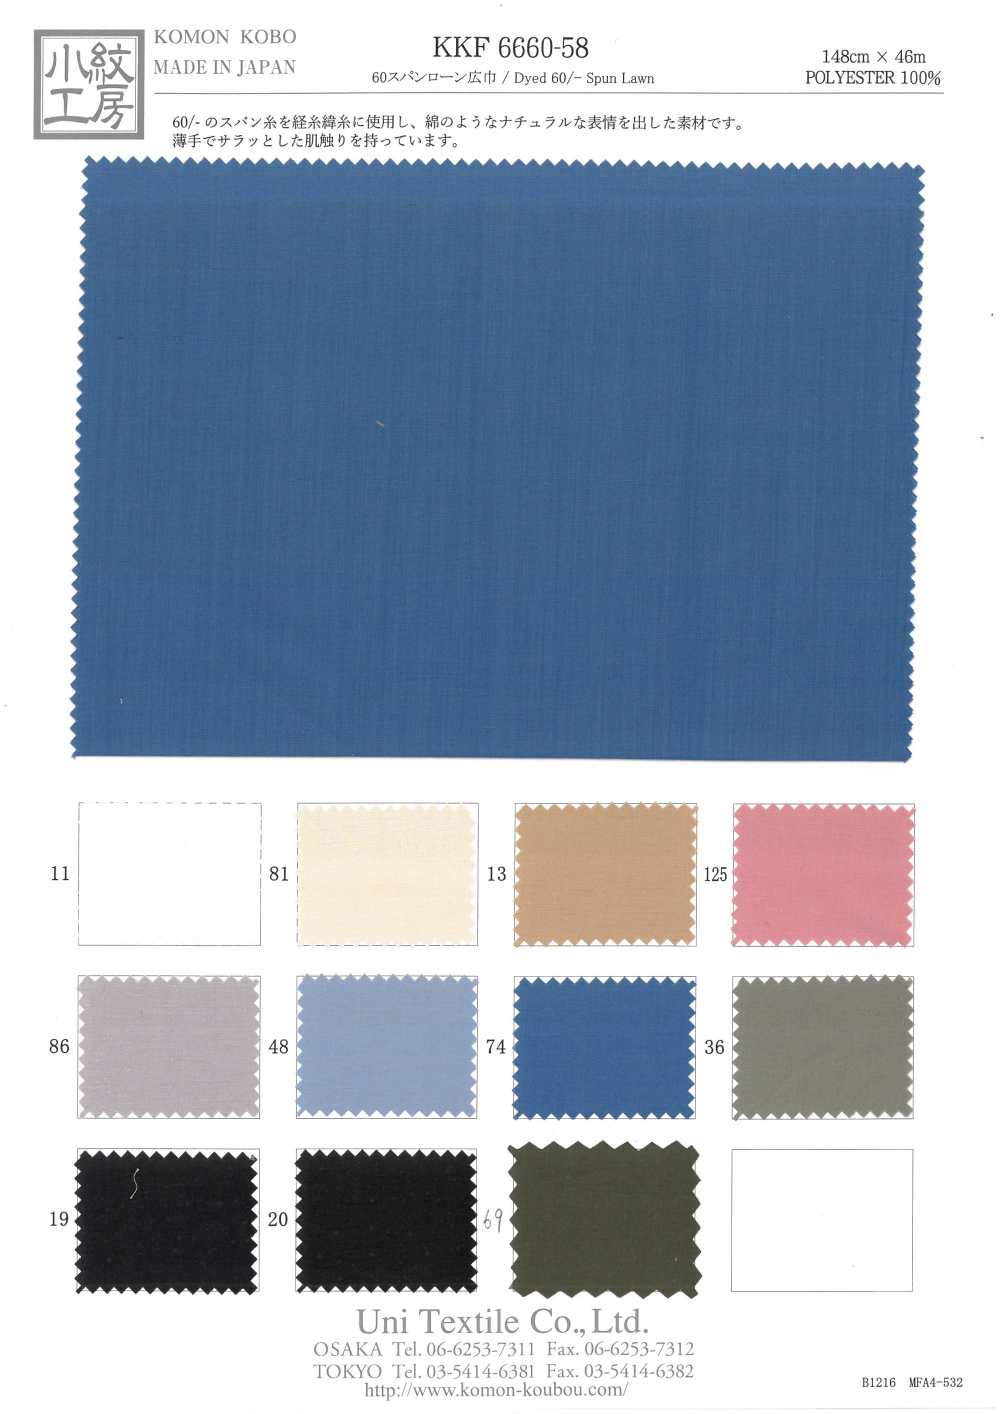 KKF6660-58 60 Span Lawn Wide[Textile / Fabric] Uni Textile